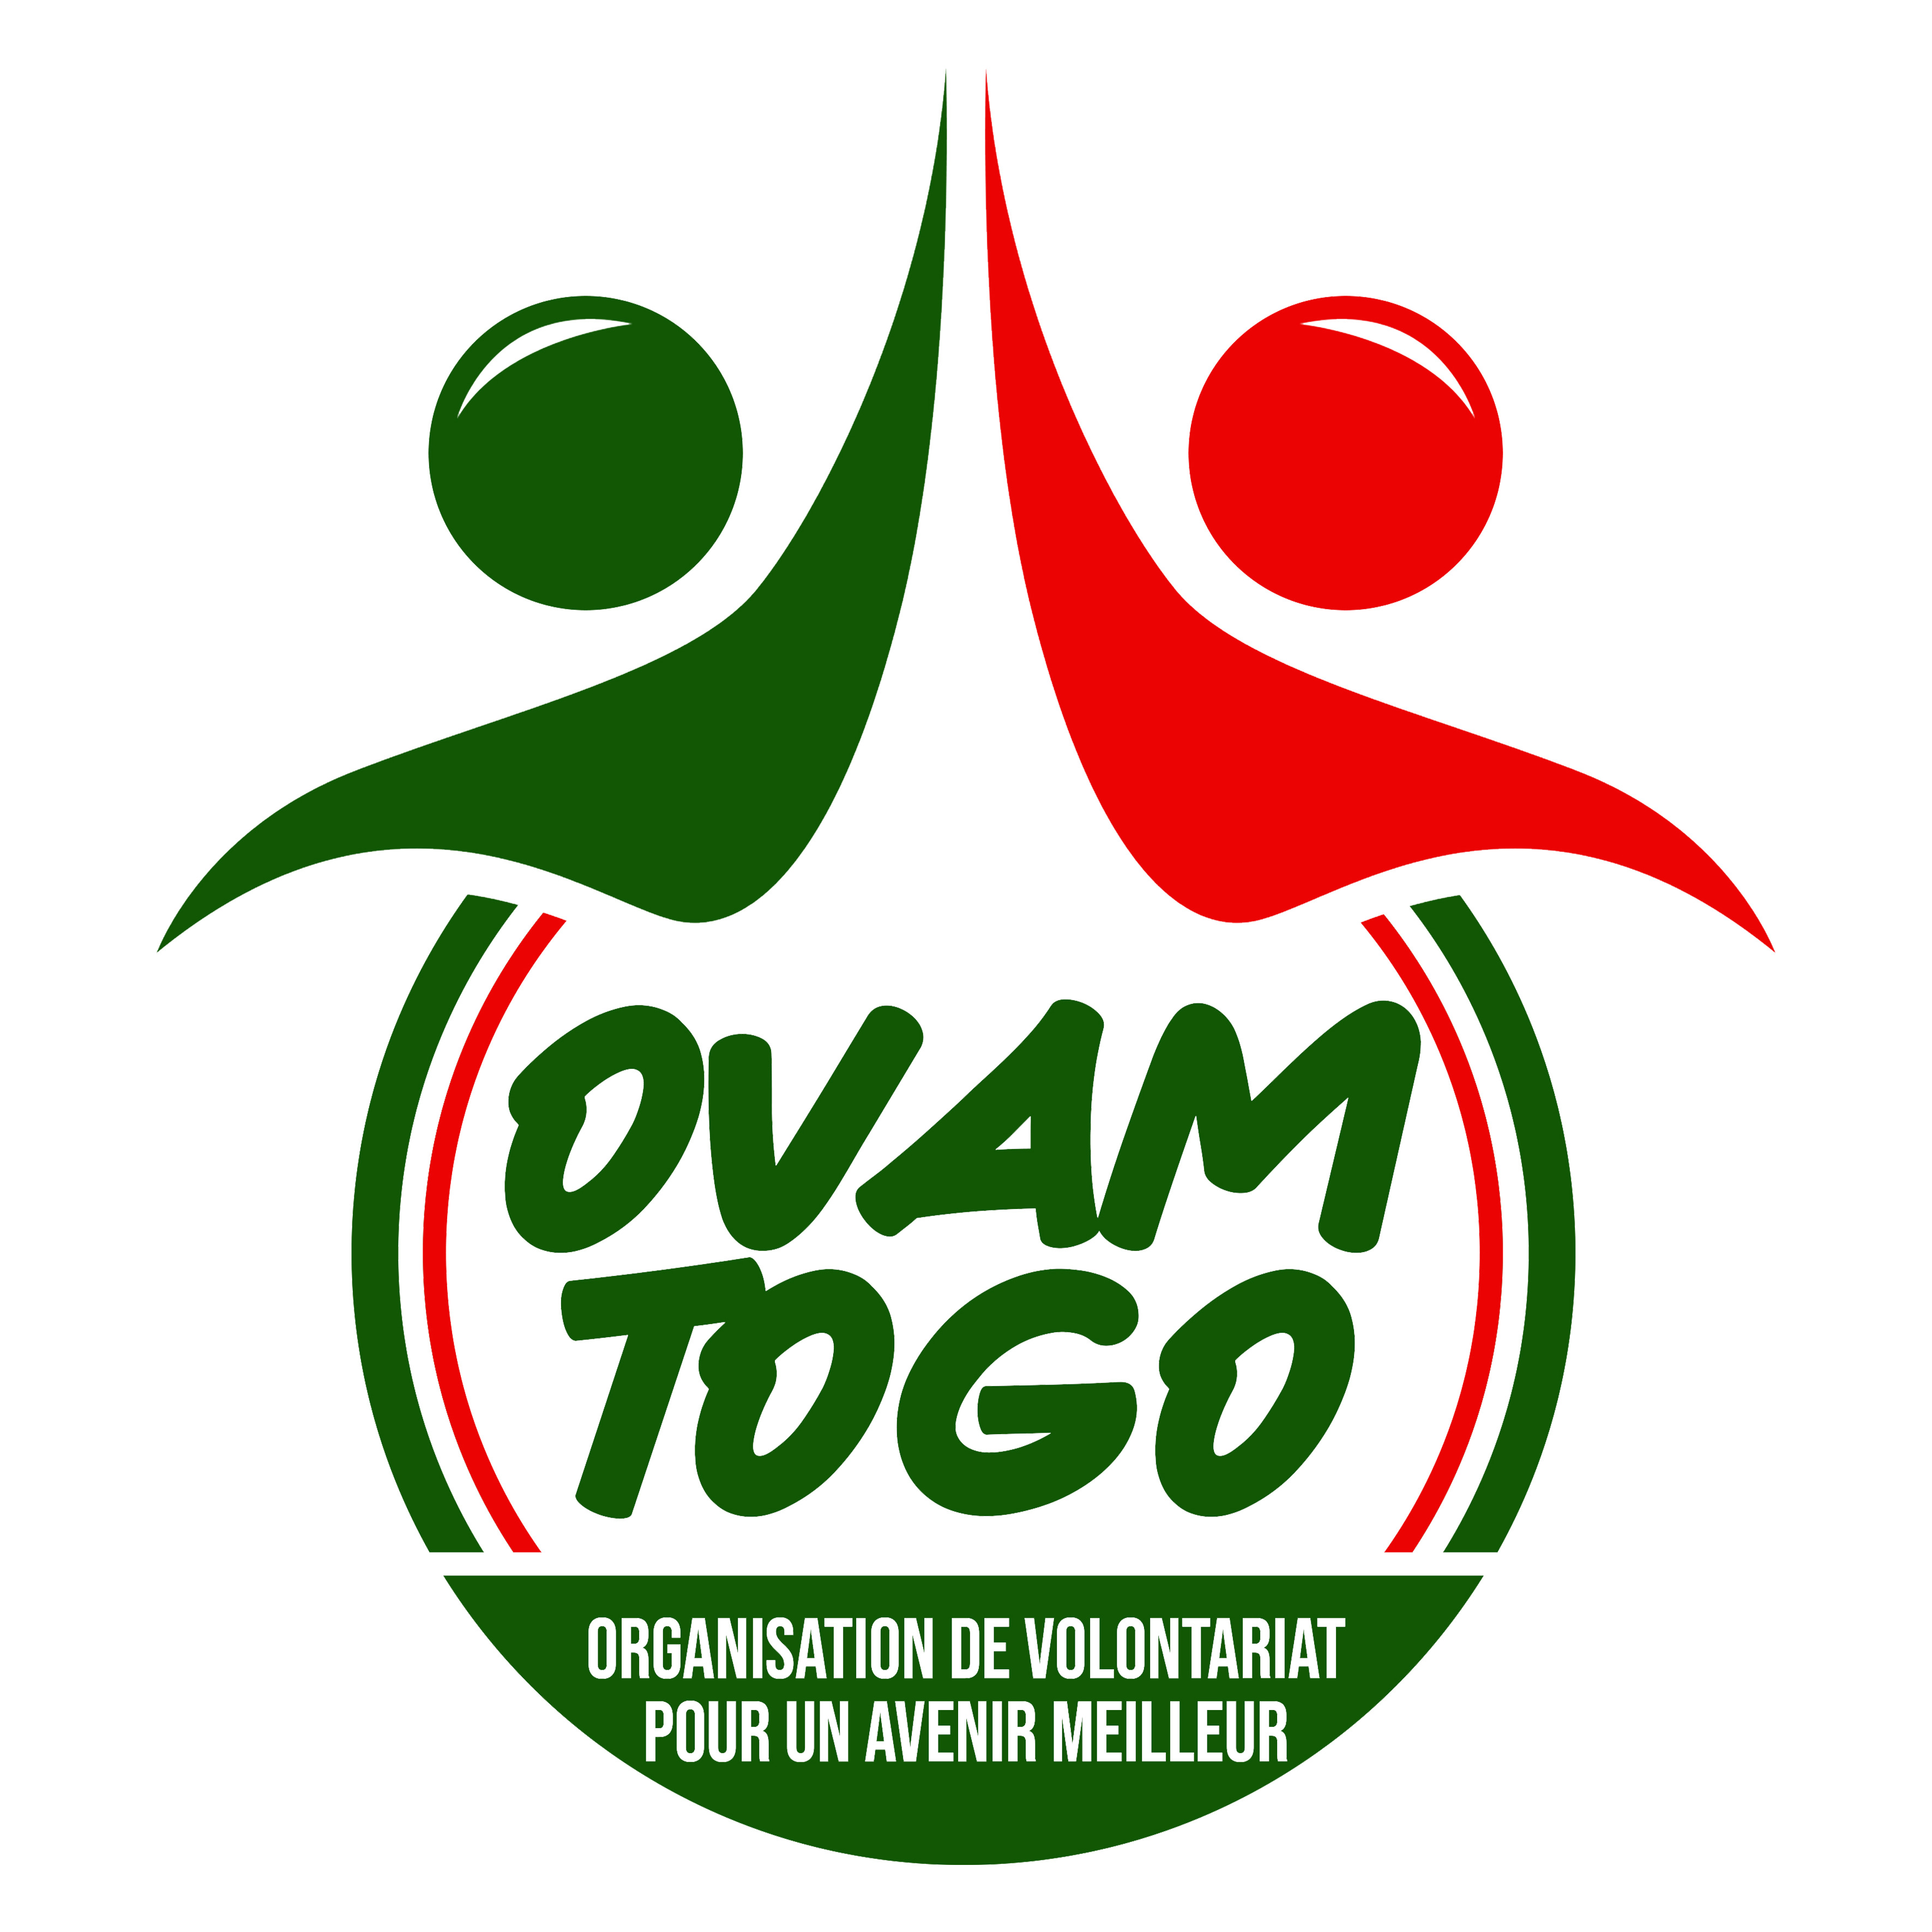 OVAM TOGO (Organisation de Volontariat pour un Avenir Meilleur)